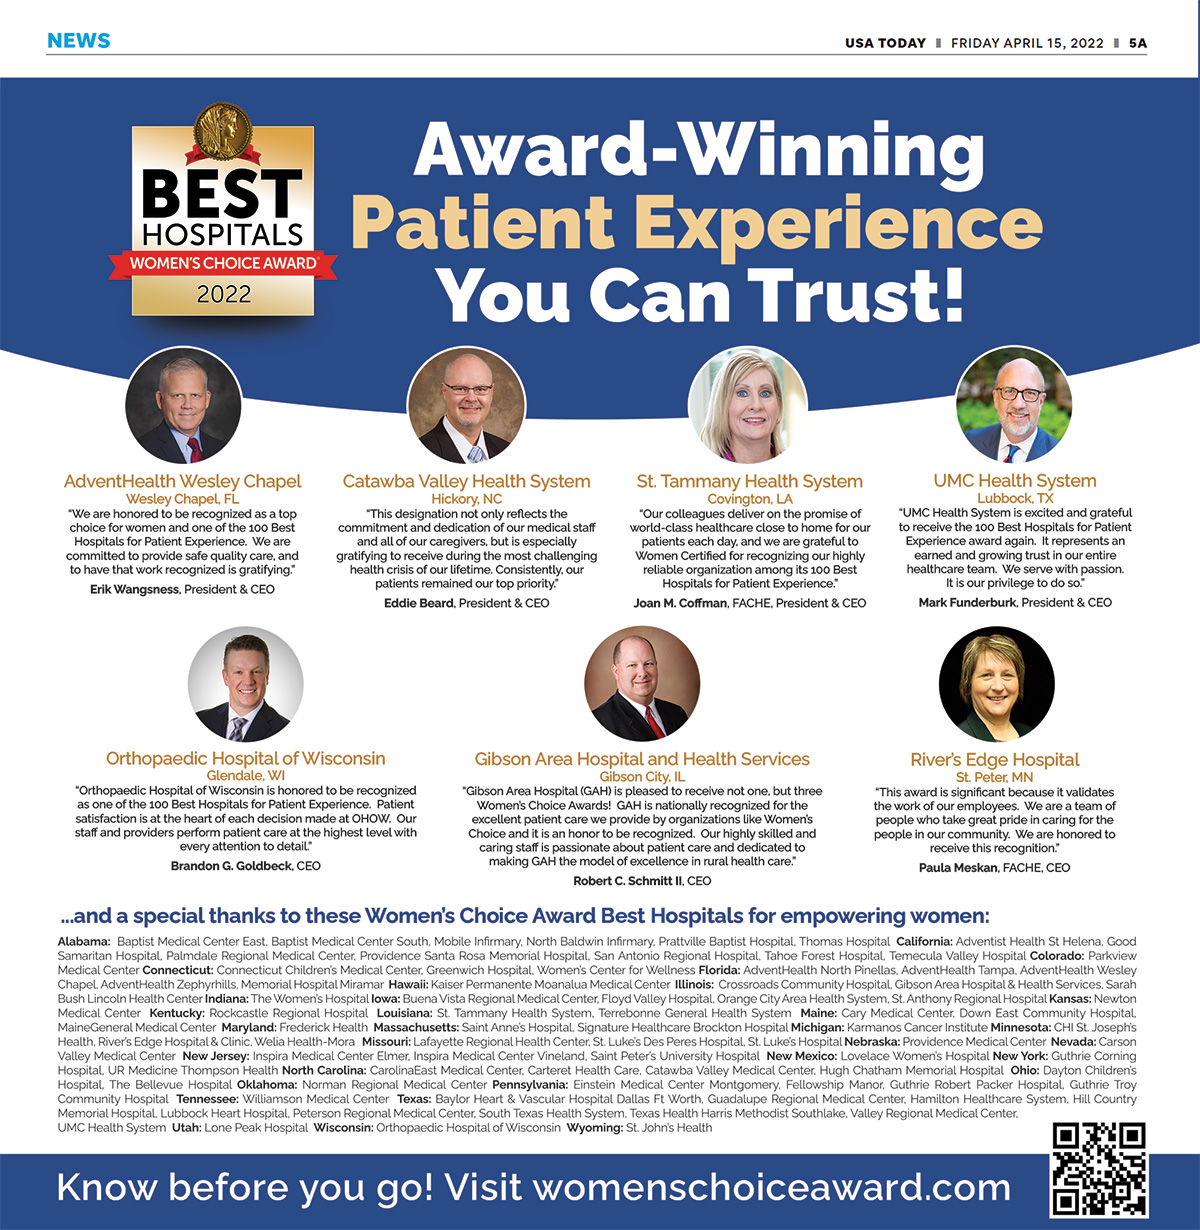 Award-Winning Patient Experience